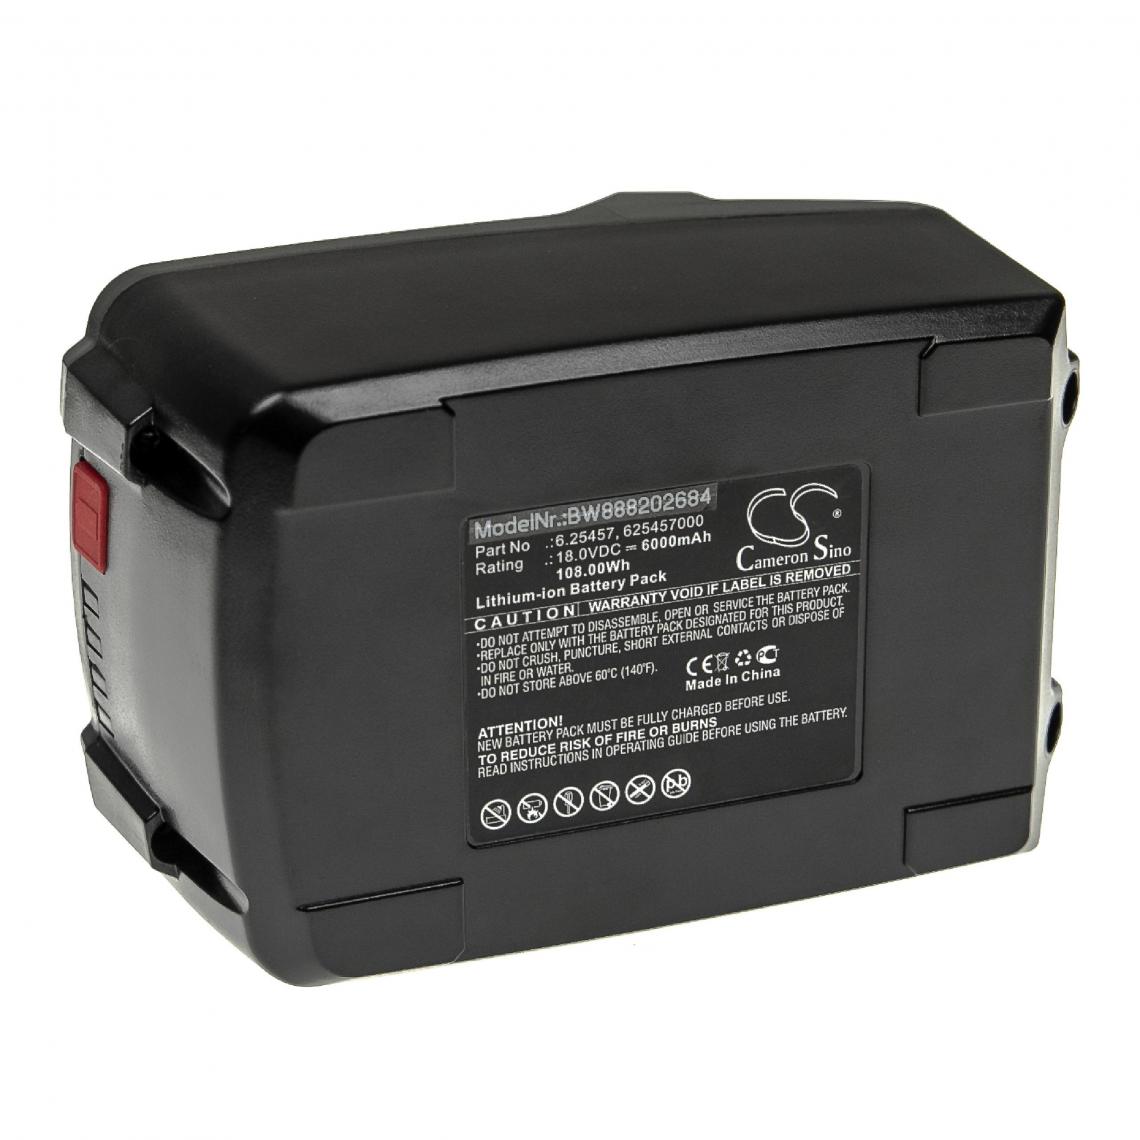 Vhbw - vhbw Batterie compatible avec Metabo GA 18 LTX 600638890, GA 18 LTX G, GA 18 LTX G 600639850 outil électrique (6000mAh Li-ion 18 V) - Autre appareil de mesure